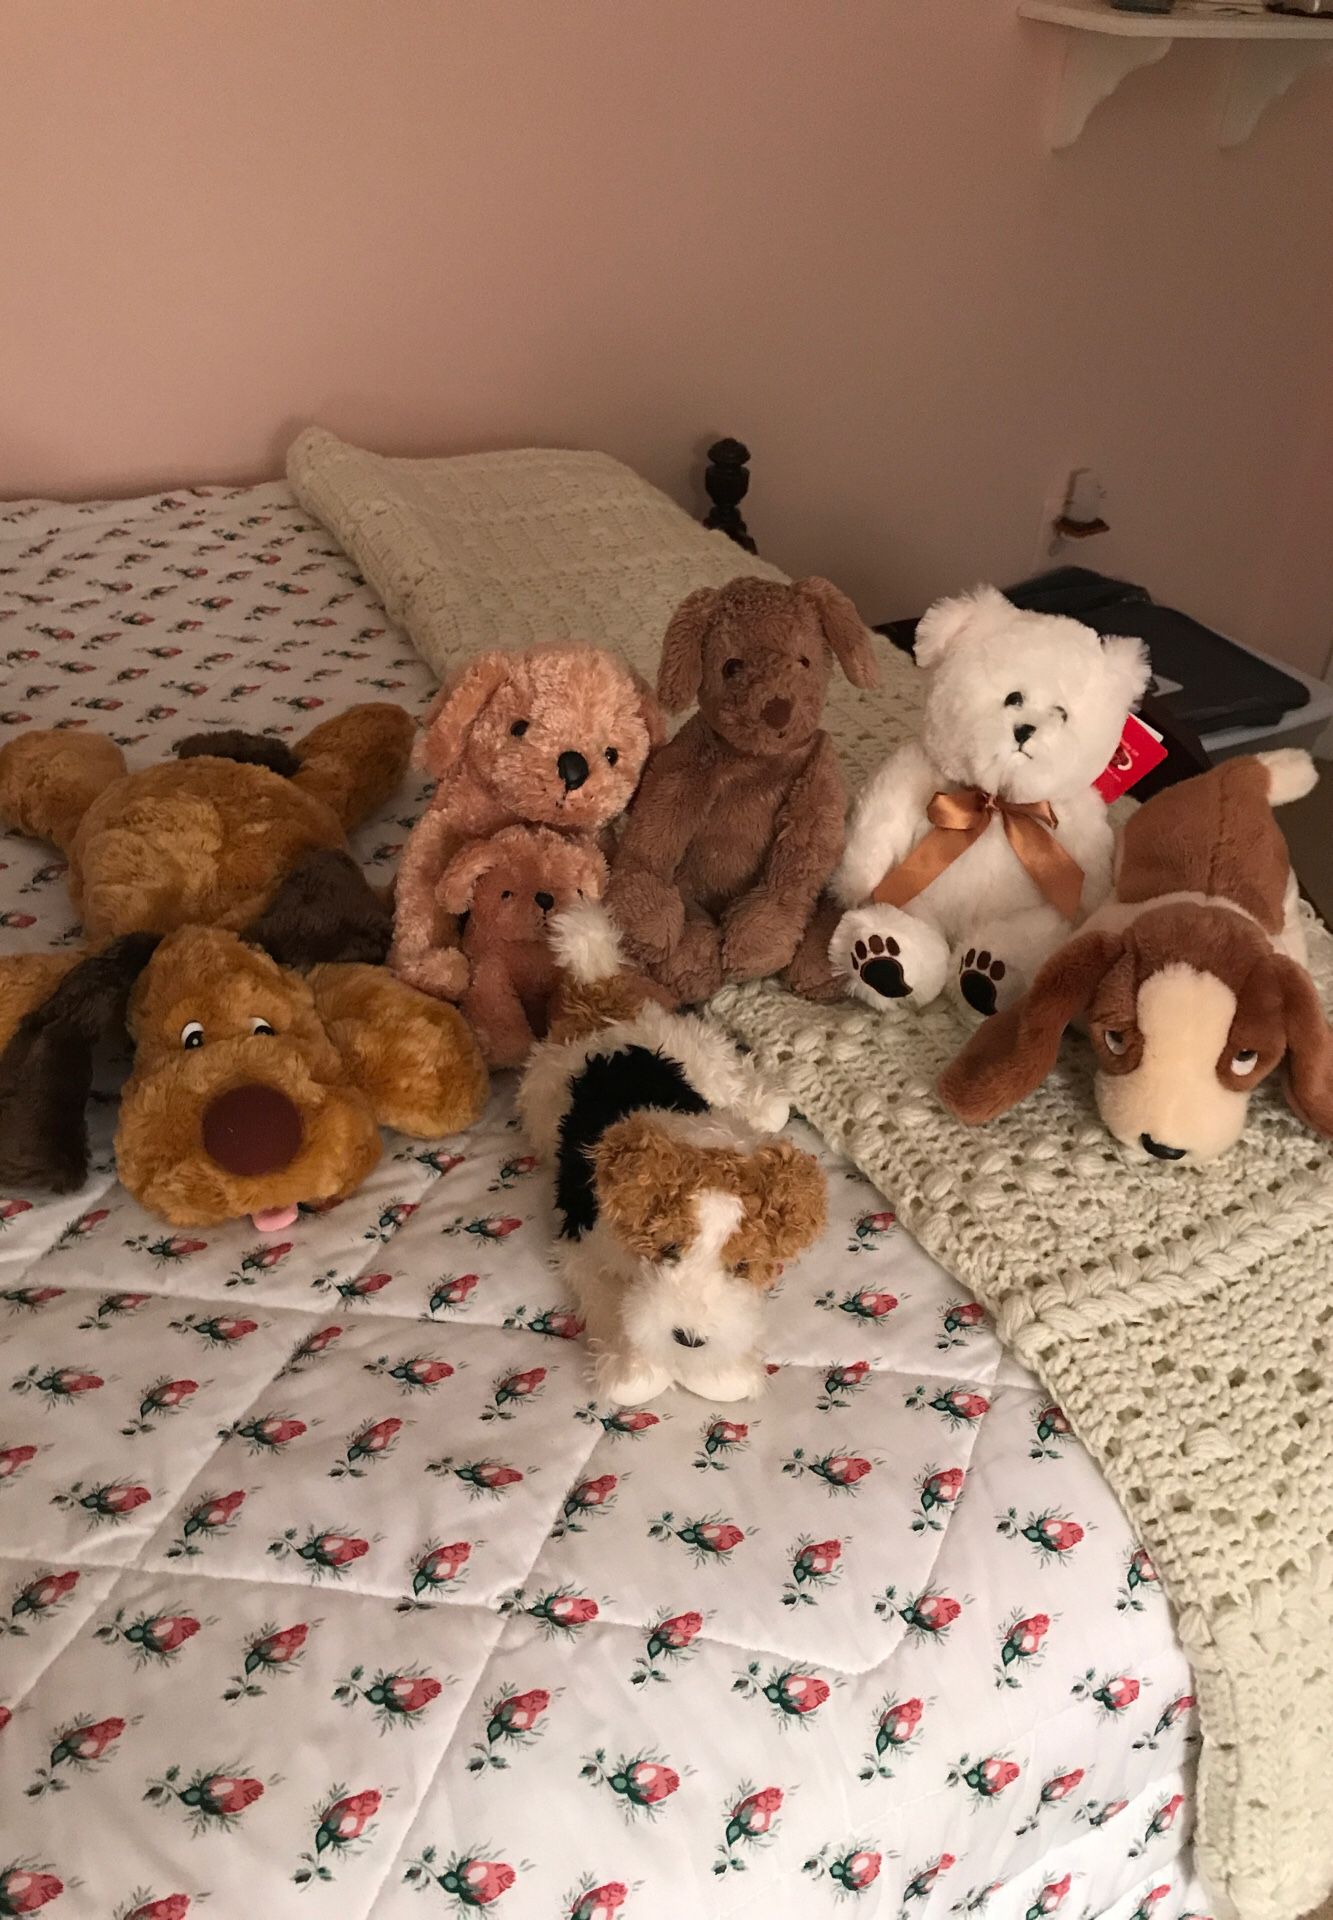 6 stuffed animals